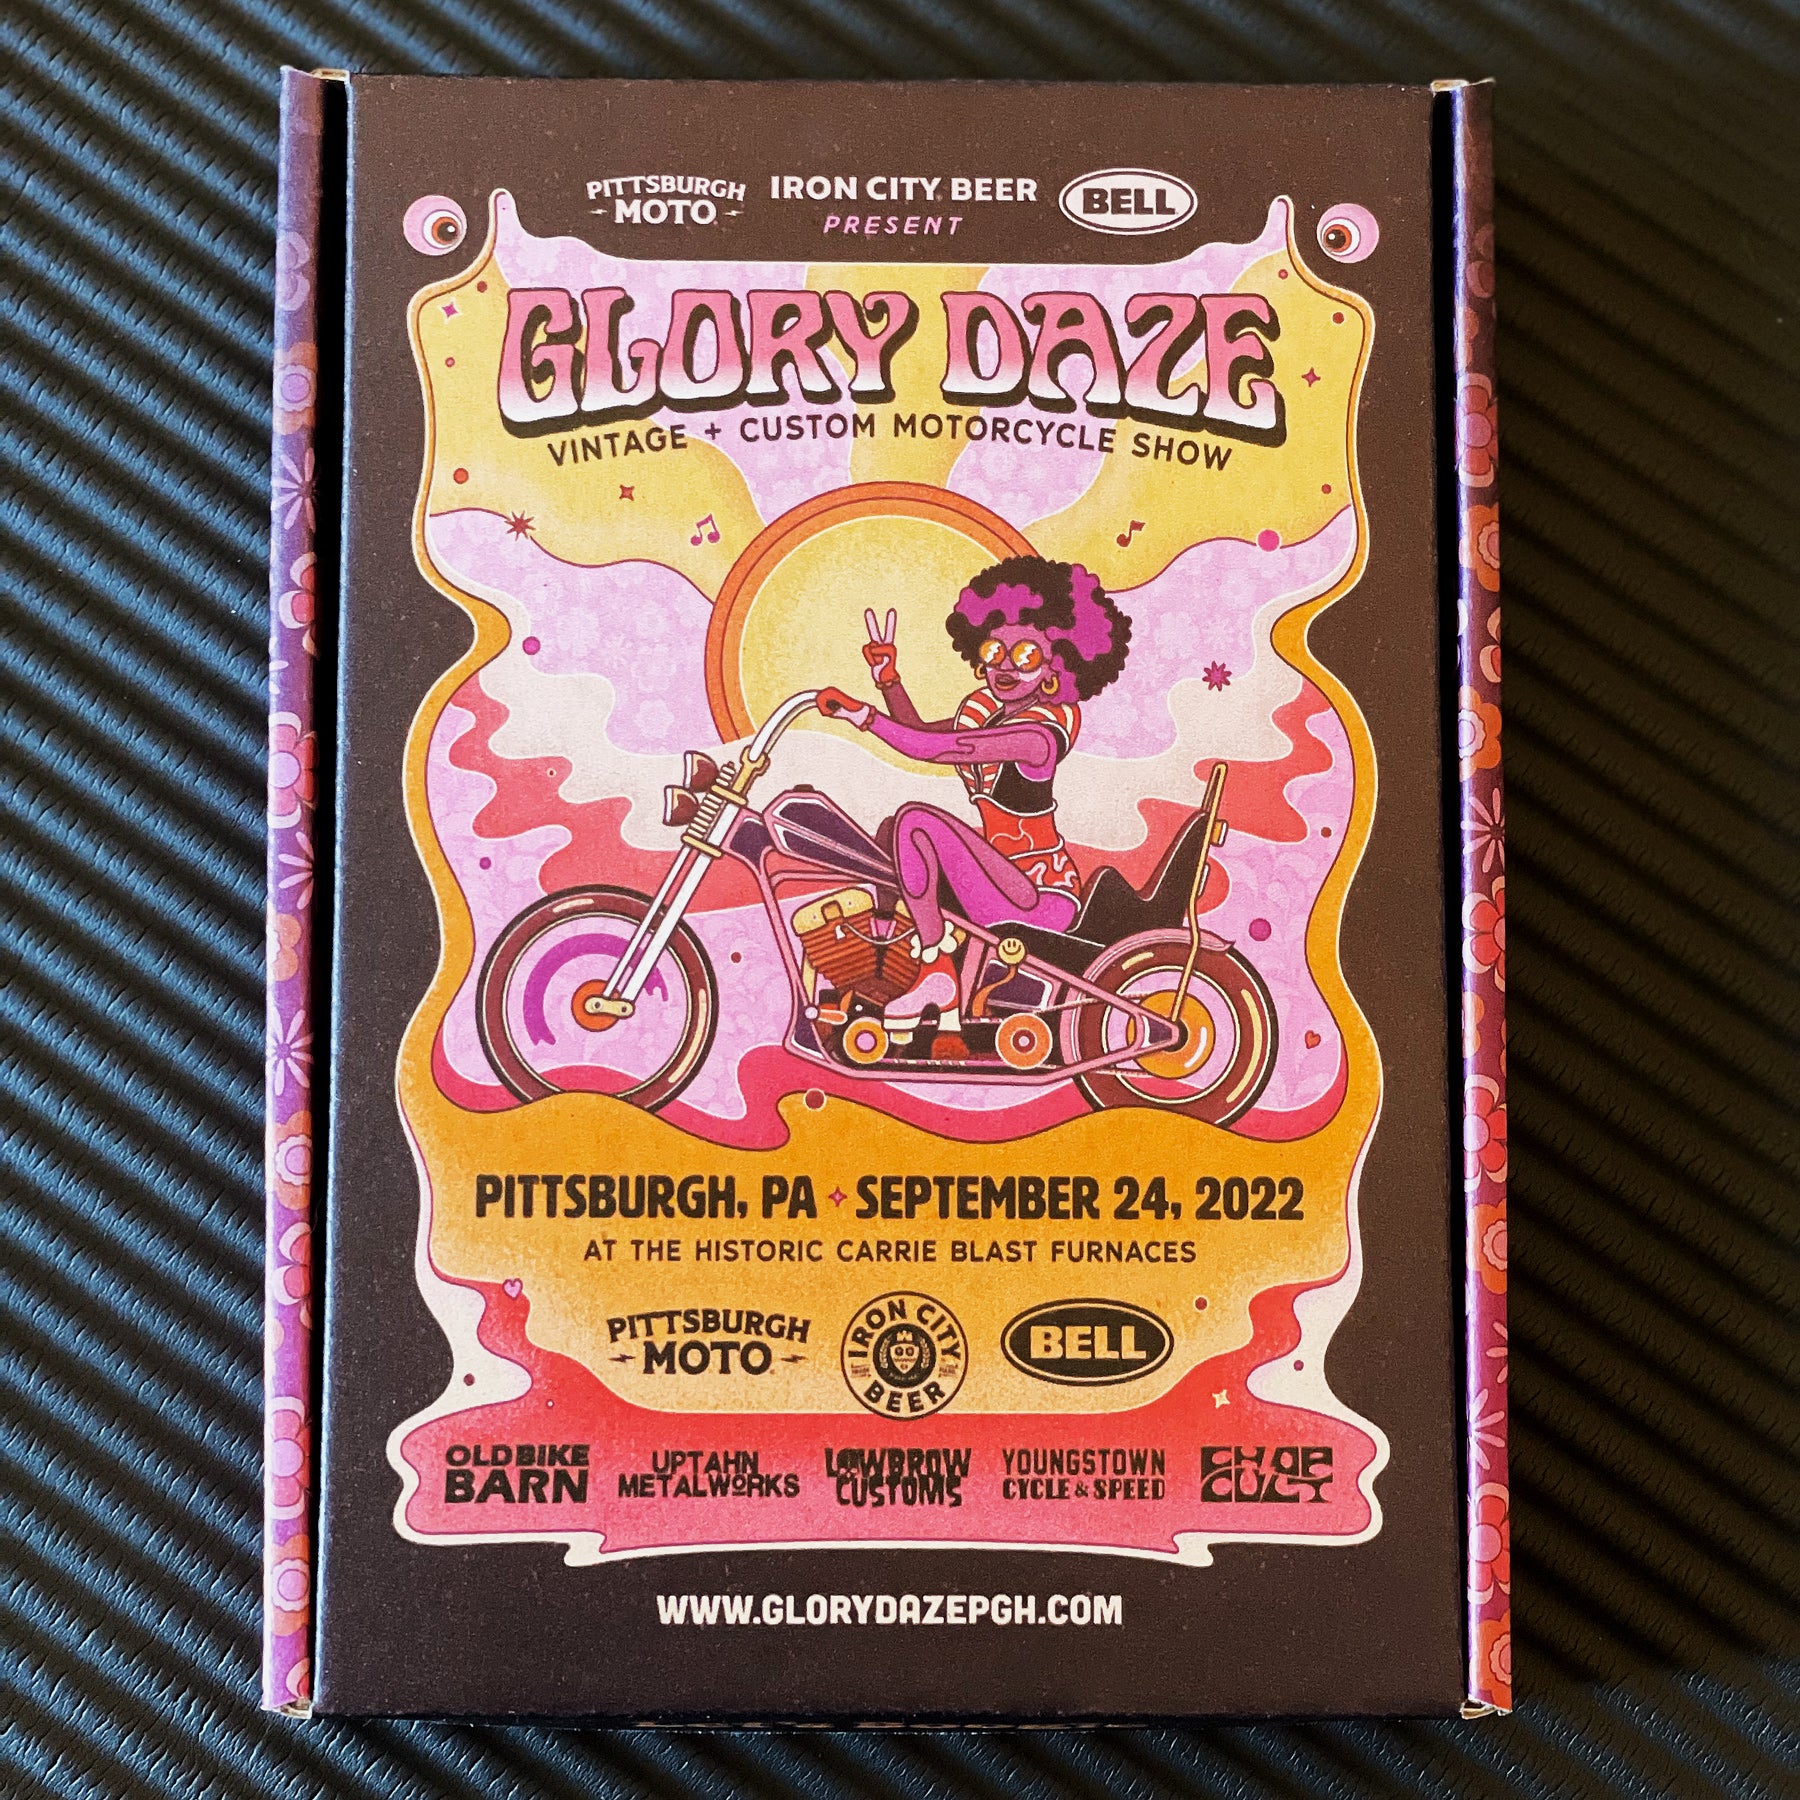 Kurt Diserio artist designer animated illustration poster glory daze motorcycle show packaging pittsburgh event